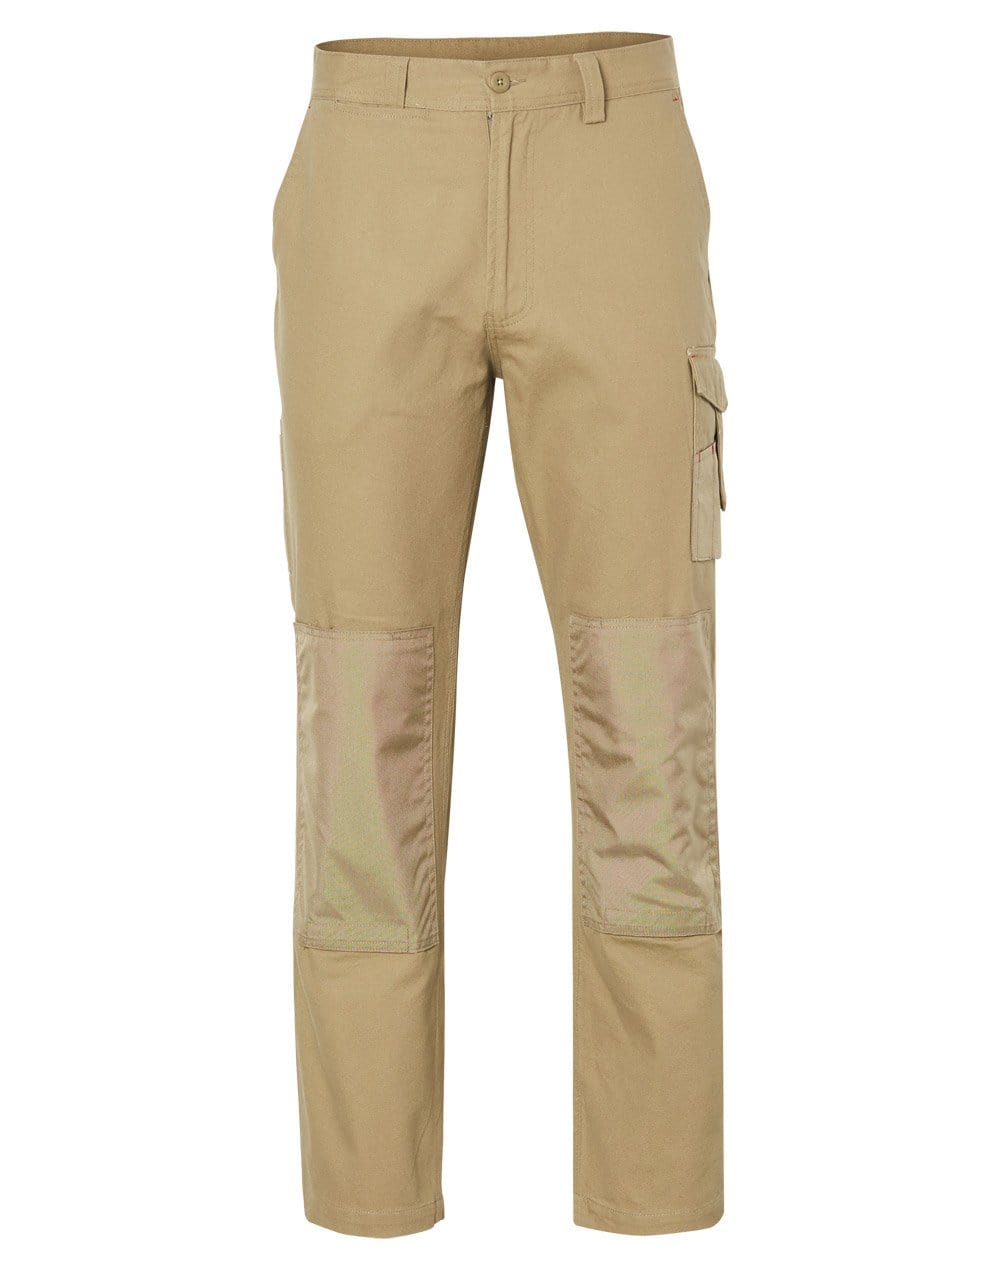 Australian Industrial Wear Work Wear Khaki / 77R CORDURA DURABLE WORK PANTS Regular Size WP09